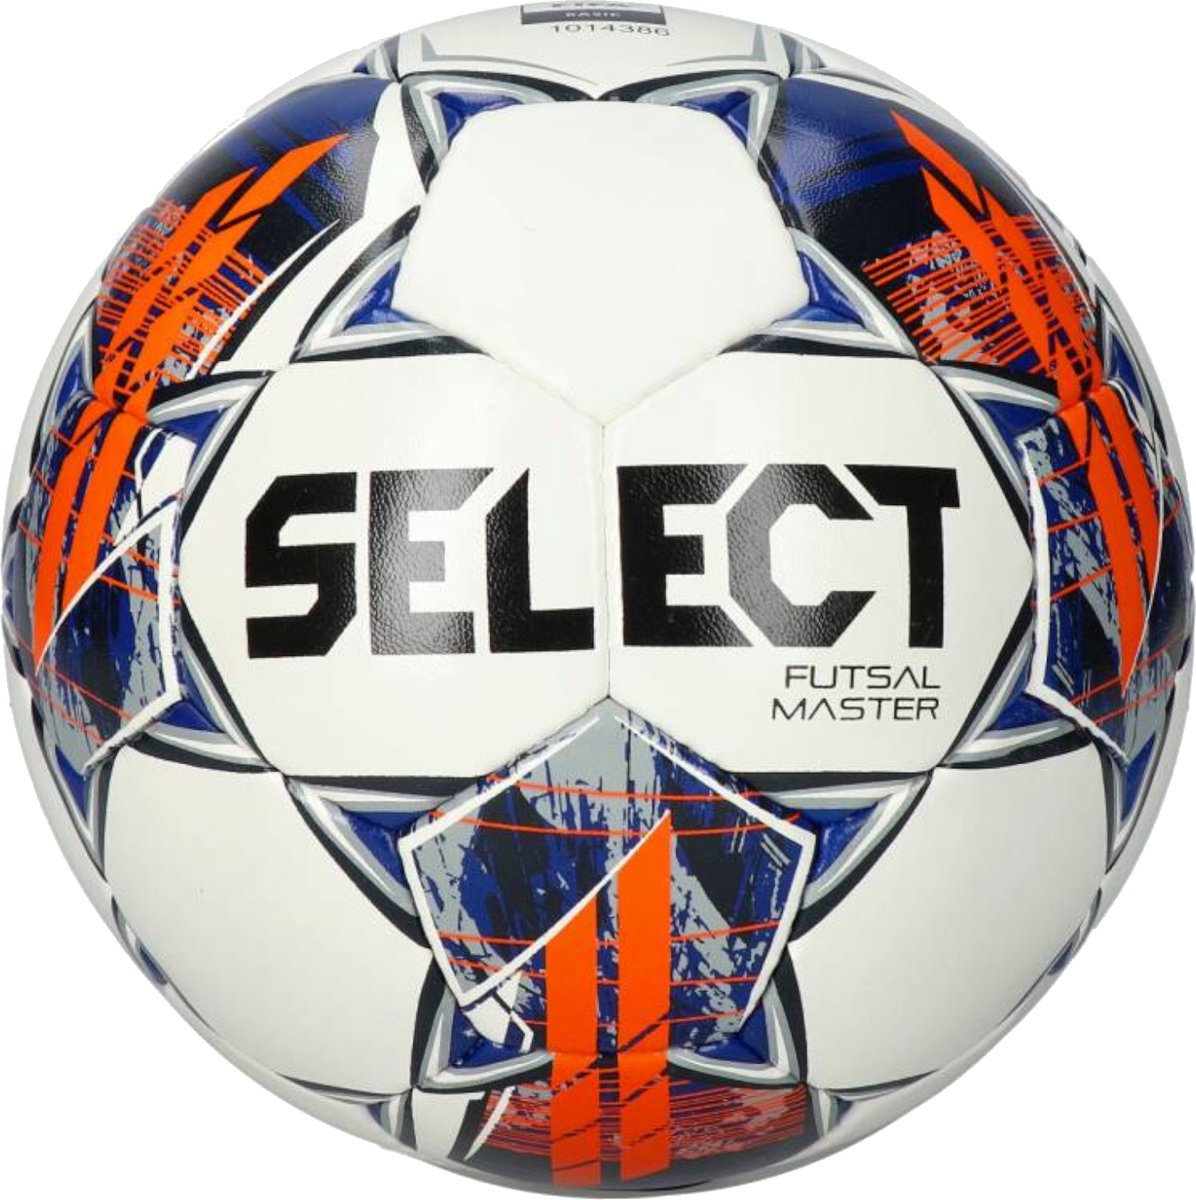 Select Futsal Master (Grain) V22 Voetbal - Wit | Maat: SZ. FUTSAL